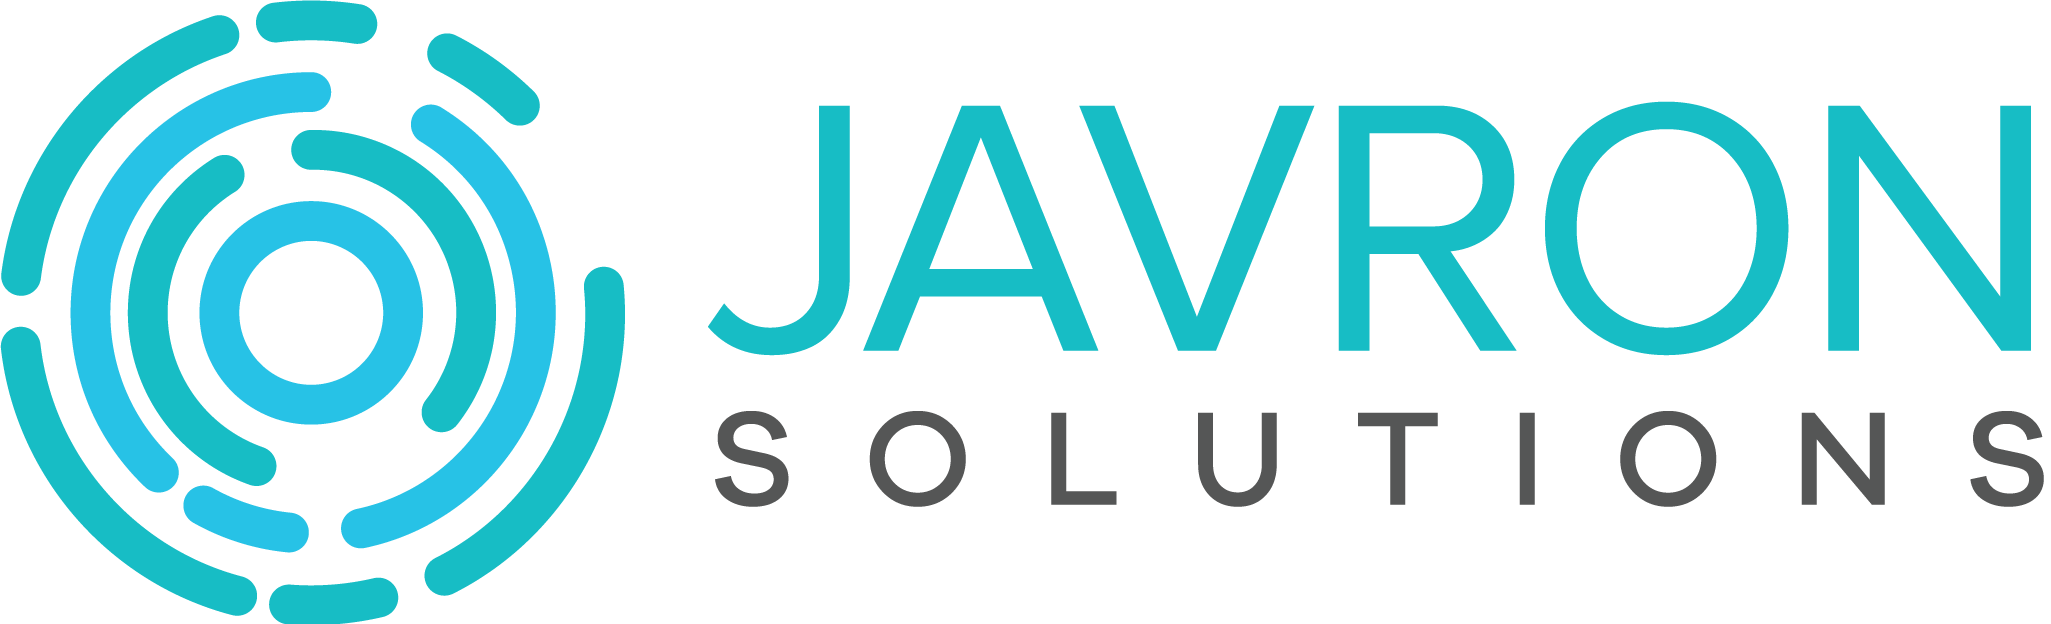 javron solutions logo